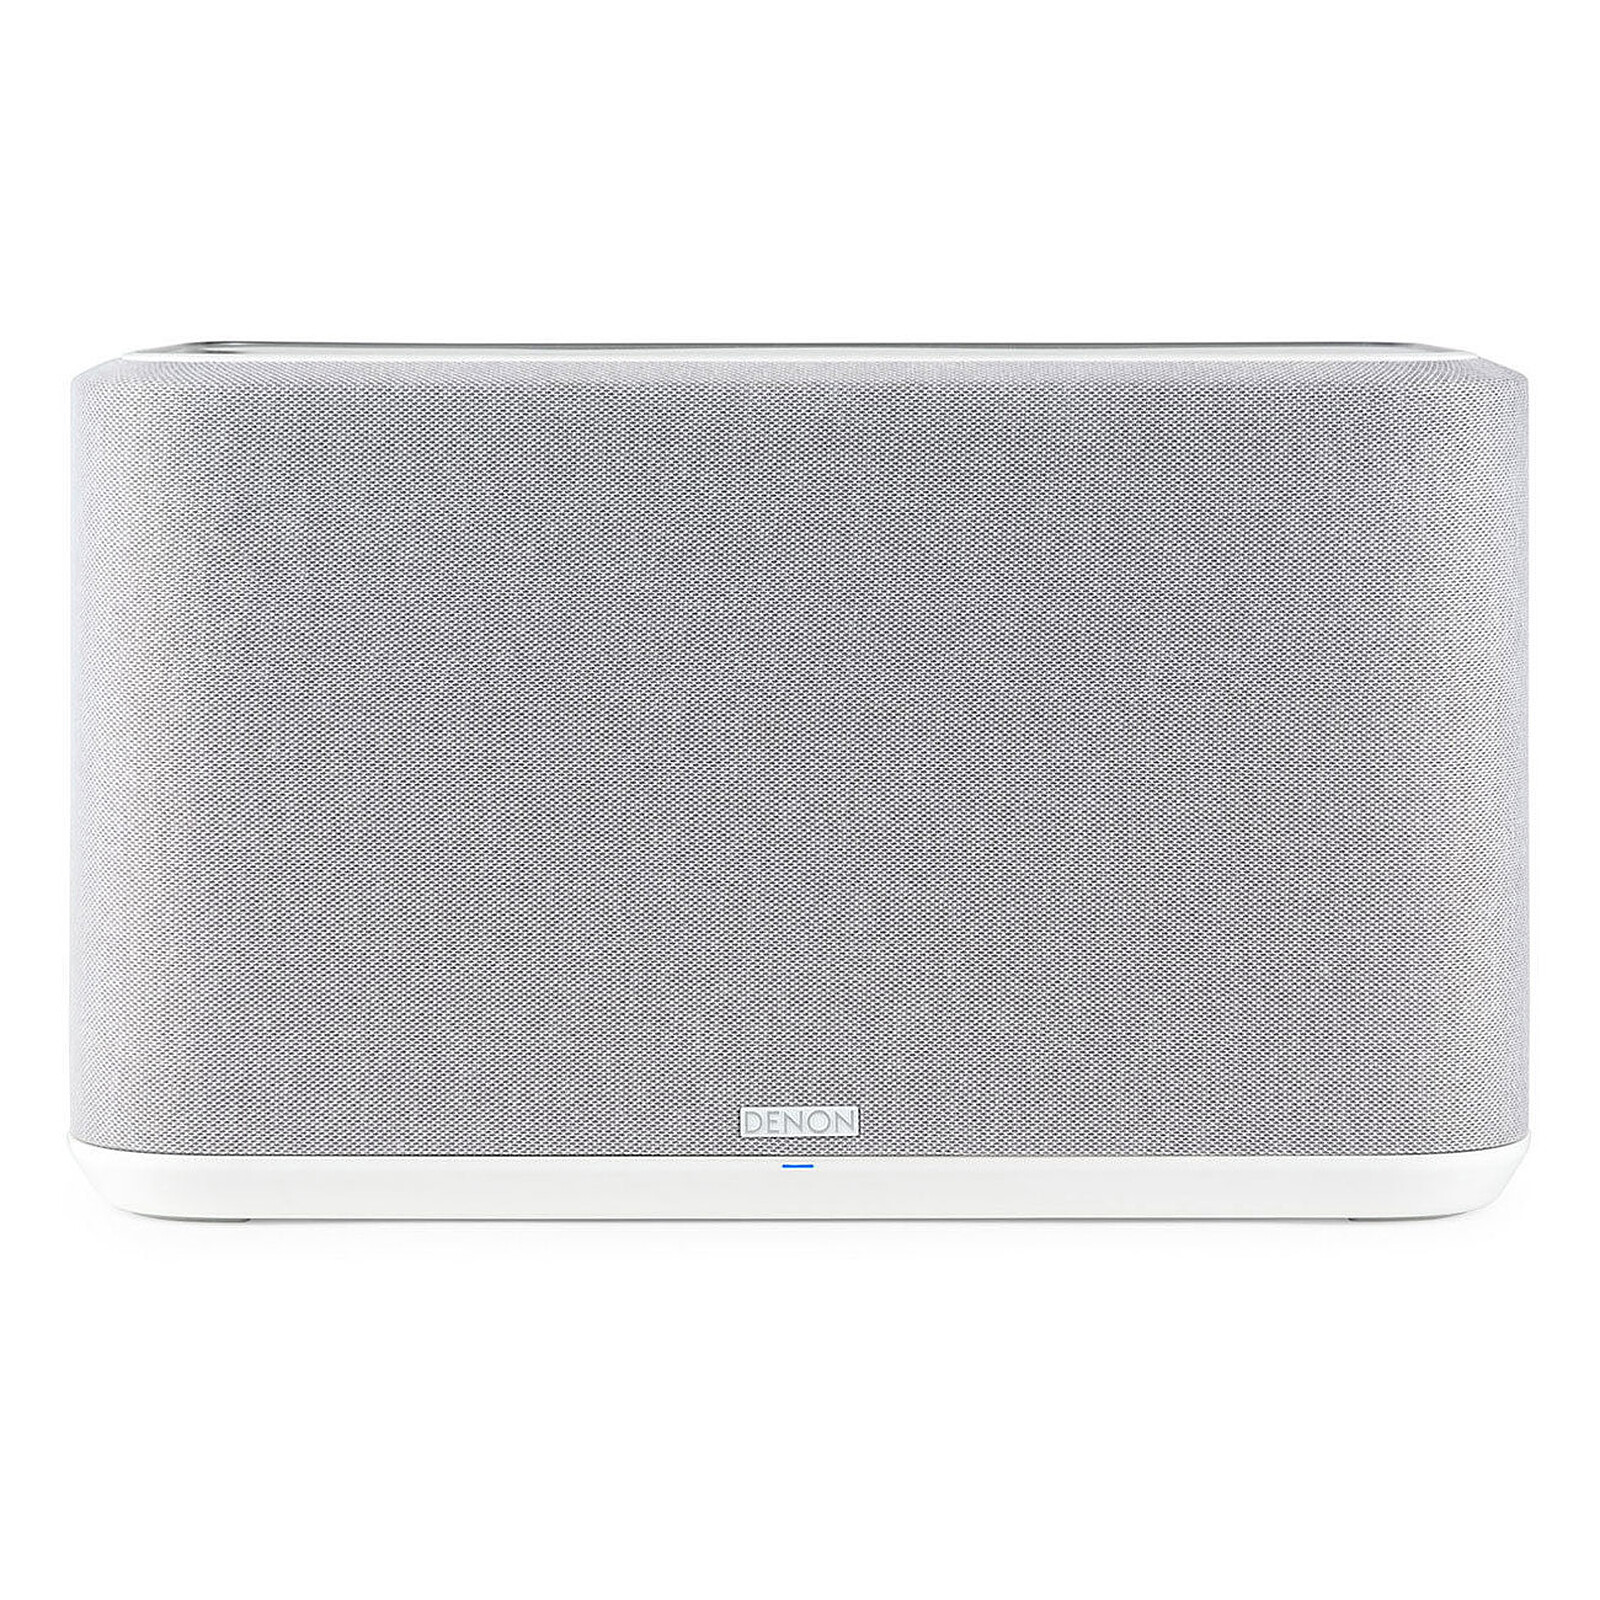 Bose SoundLink Color II Blanc - Enceinte Bluetooth - LDLC